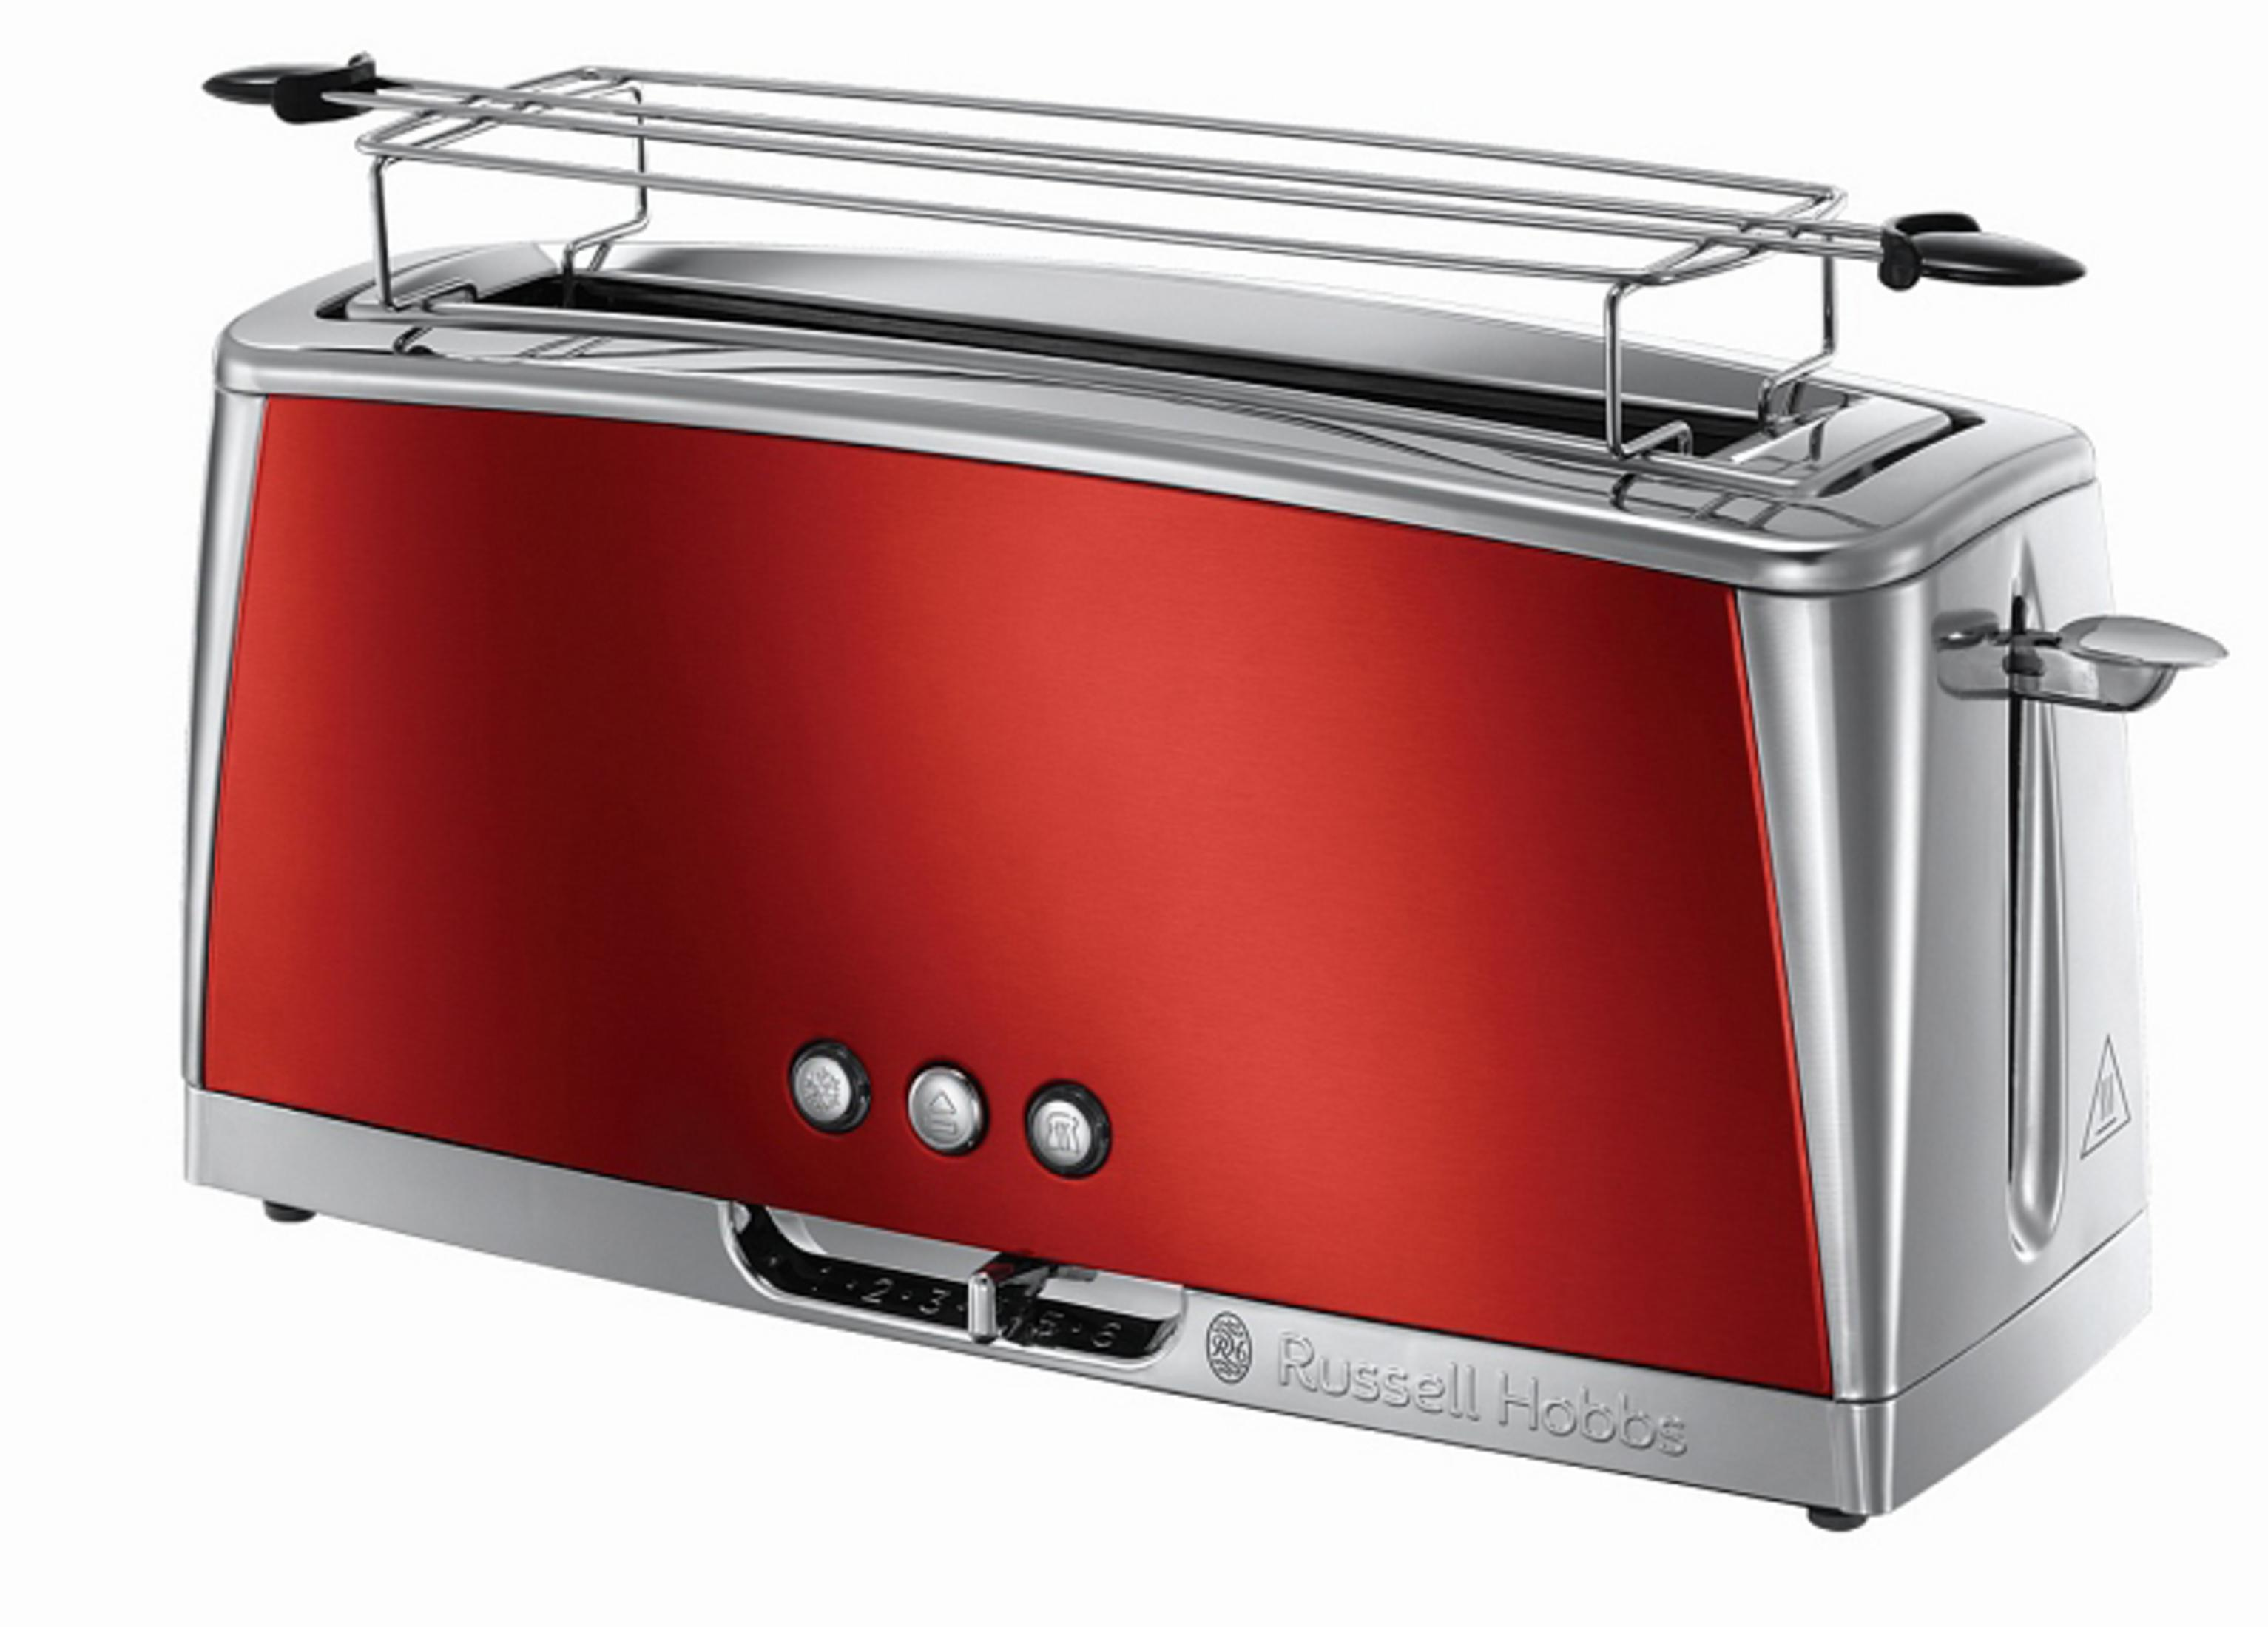 Edelstahl/Rot Toaster RH LANGSCHL. SOLAR HOBBS Schlitze: RED 23250-56 LUNA Watt, 1) RUSSELL (1420